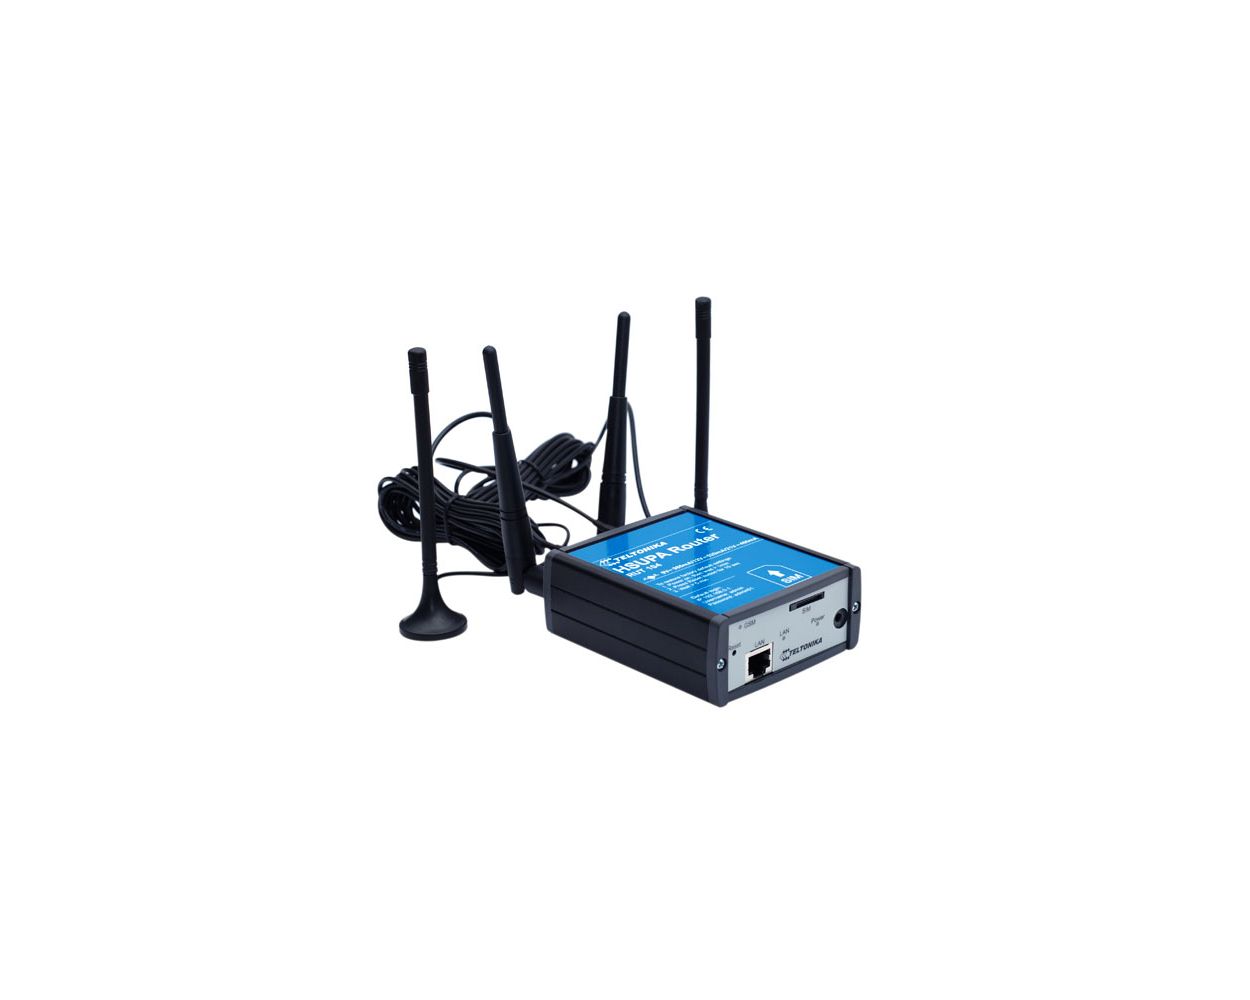 The Teltonika RUT550 21Mbps HSPA+ 4G router – Express Telephony